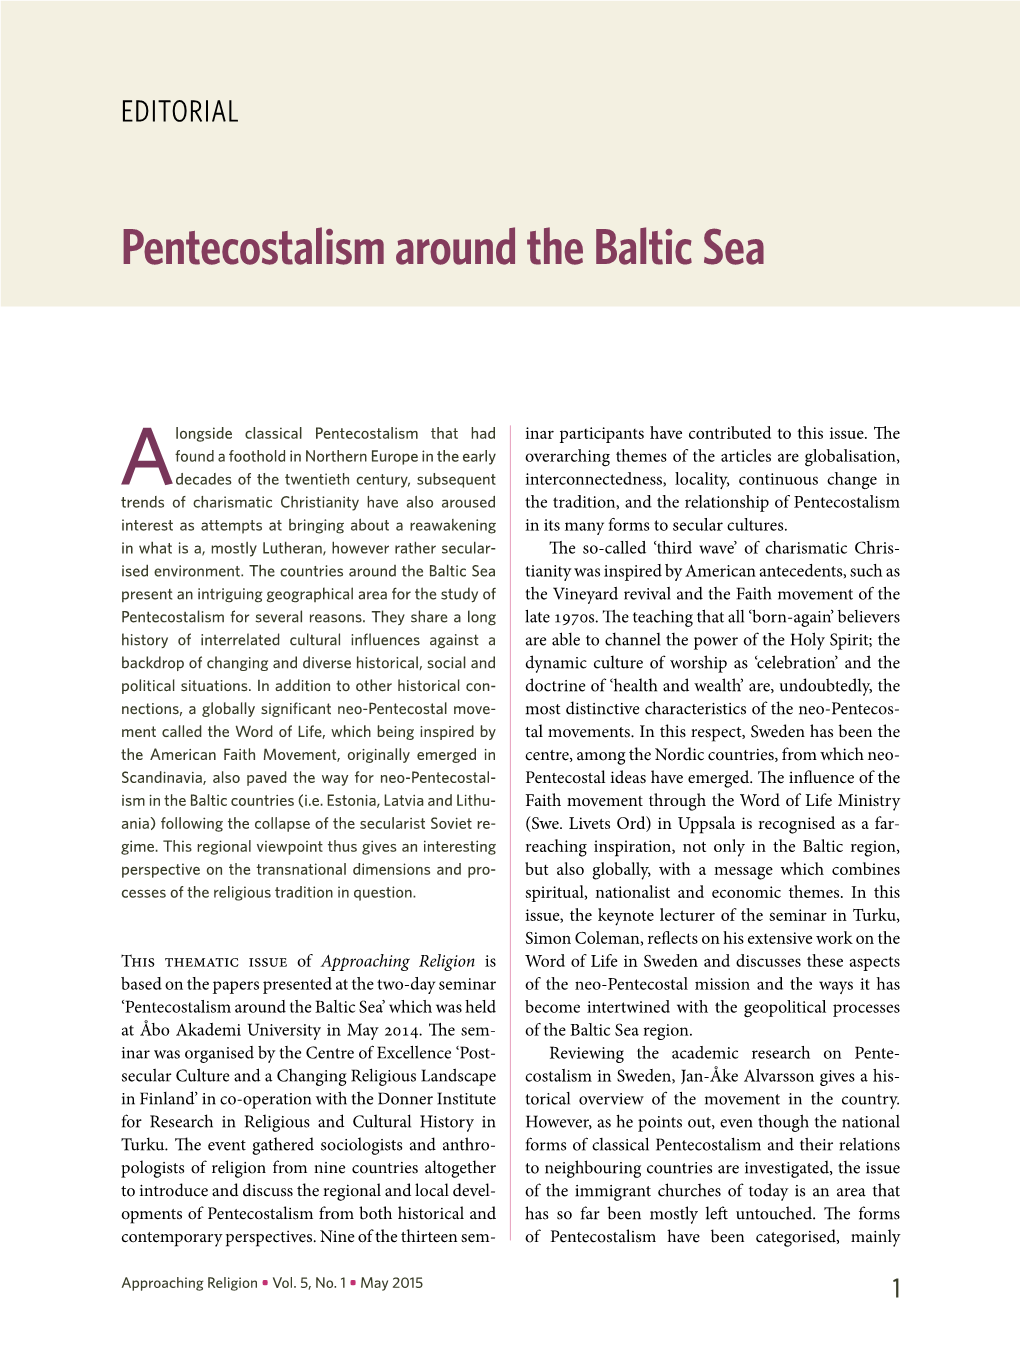 Pentecostalism Around the Baltic Sea